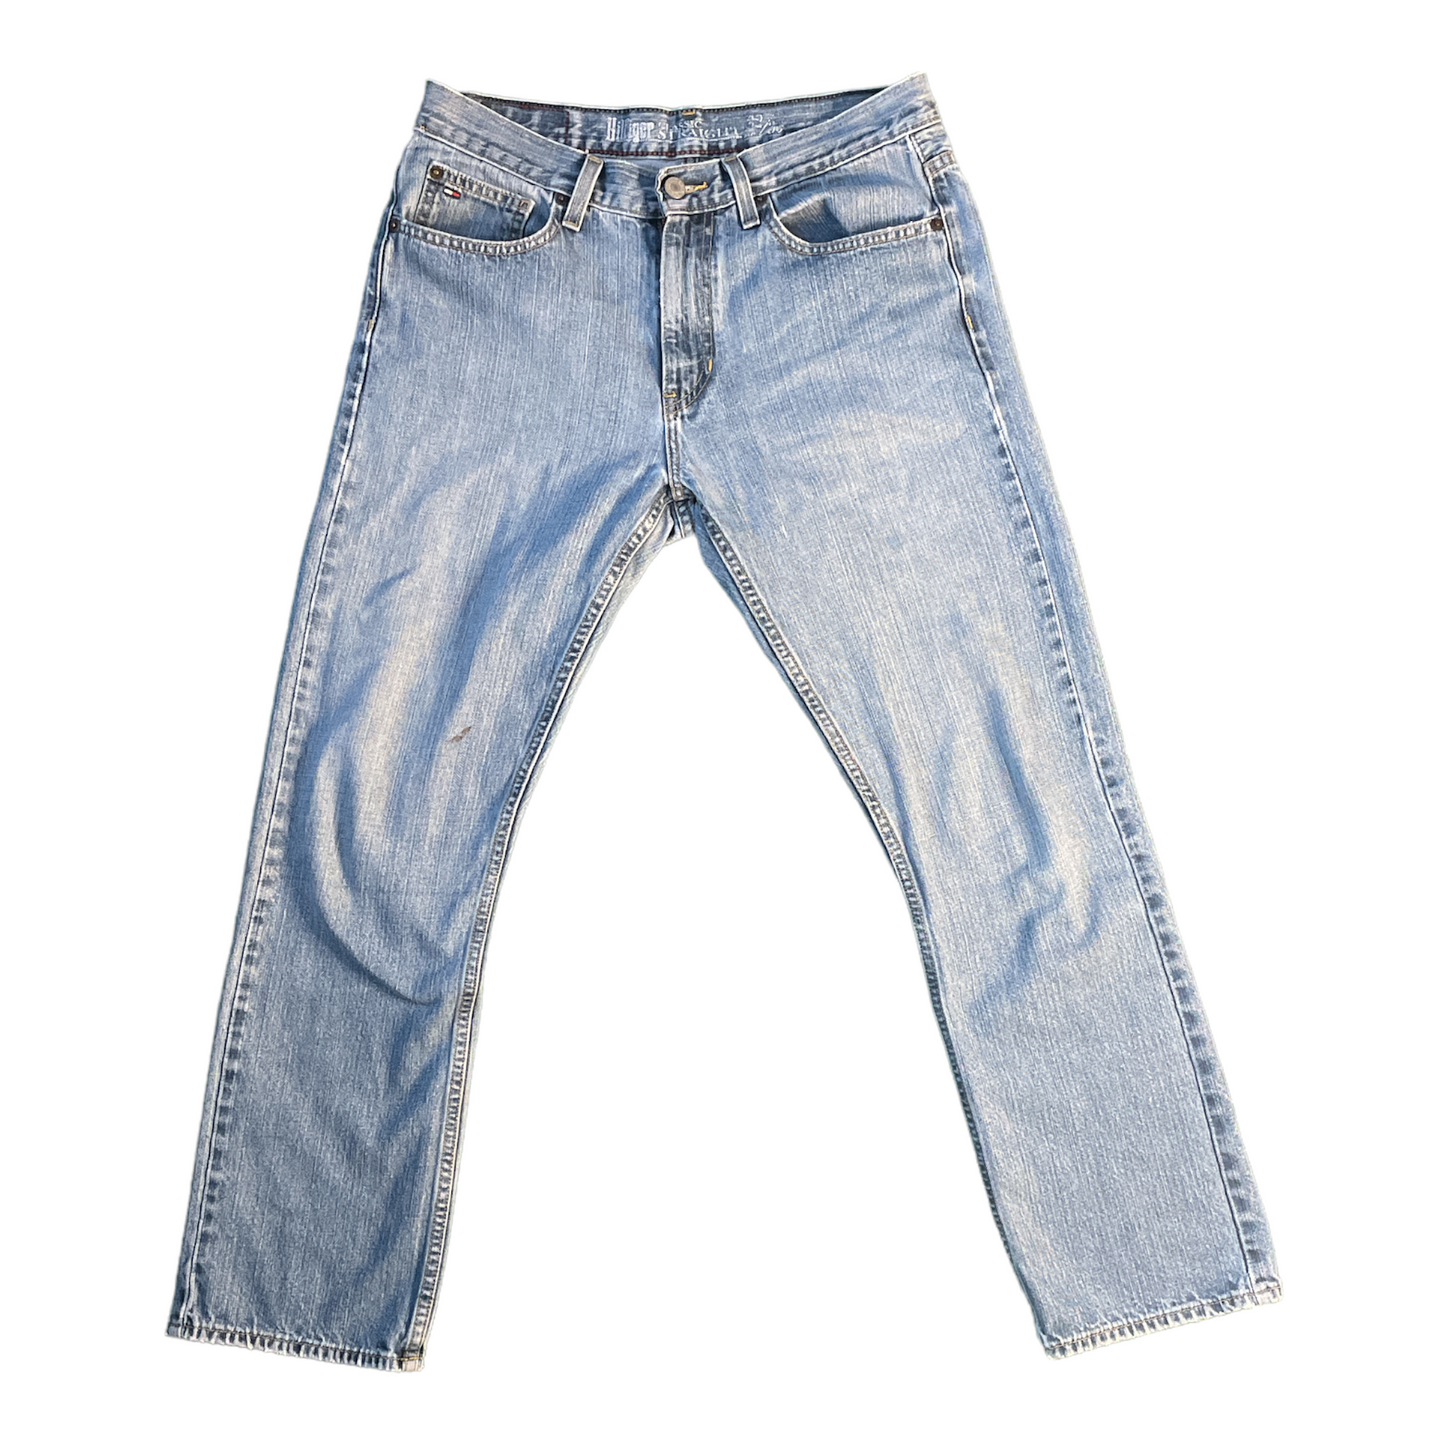 Hilfiger Brand Denim Jeans 32W 36